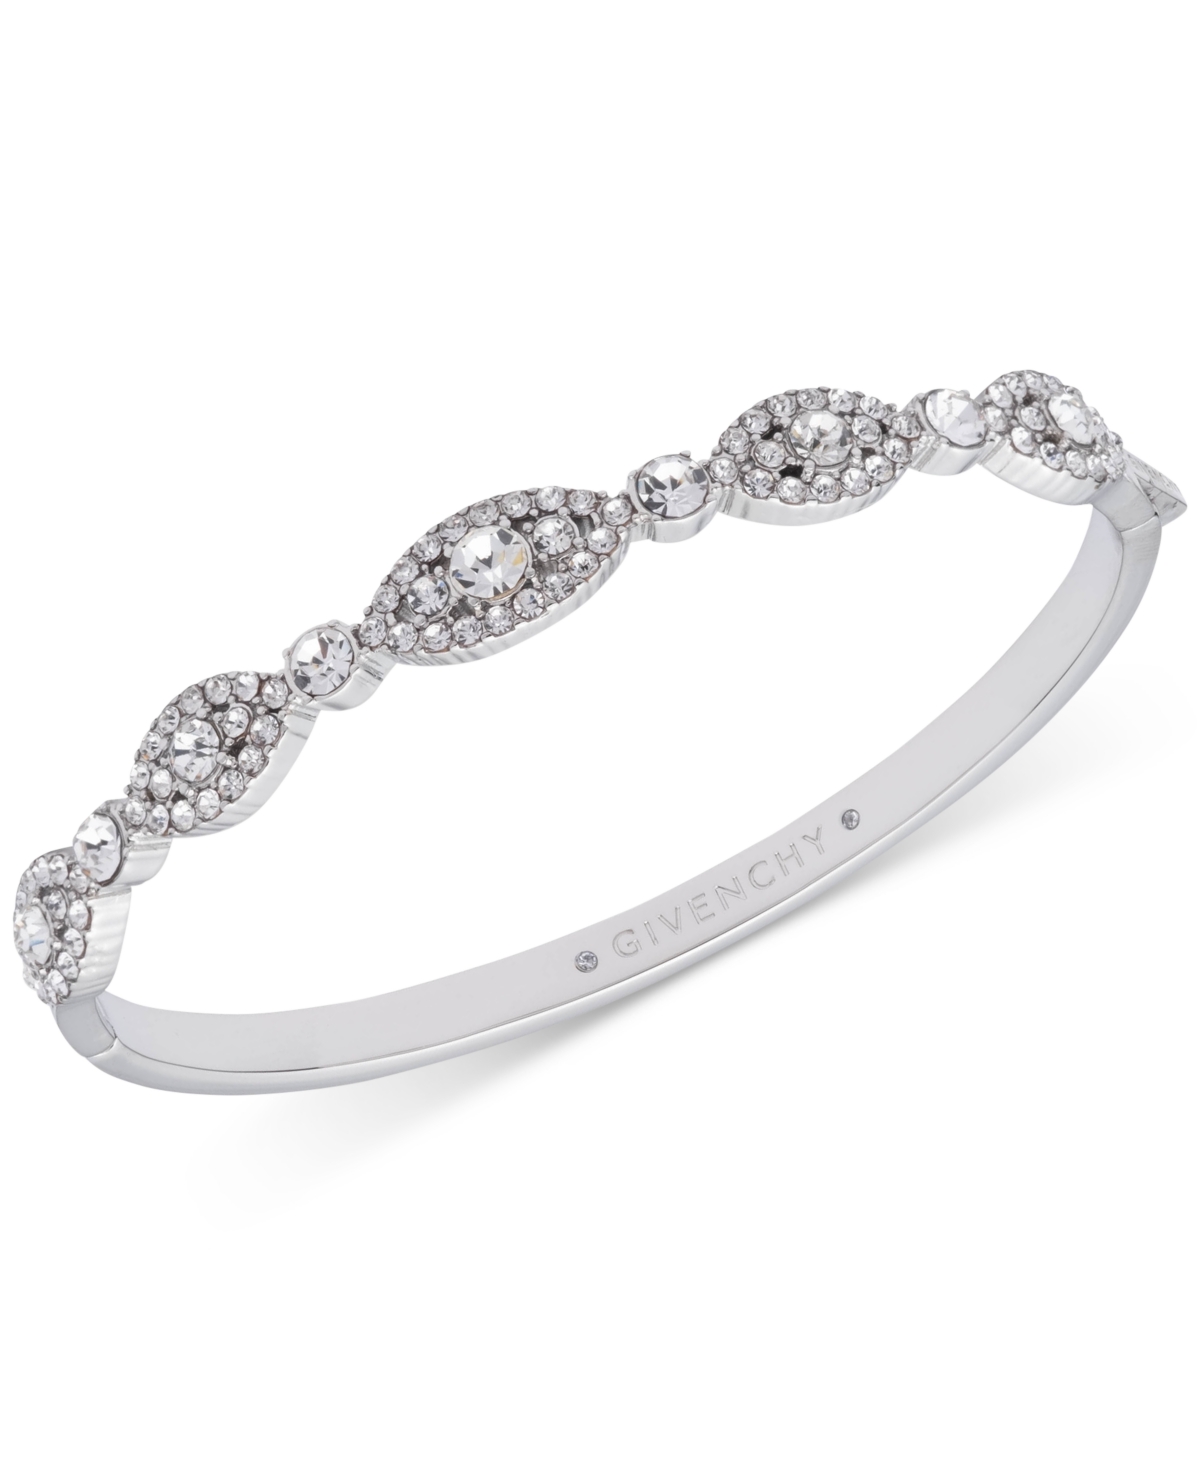 Crystal Bangle Bracelet - Silver